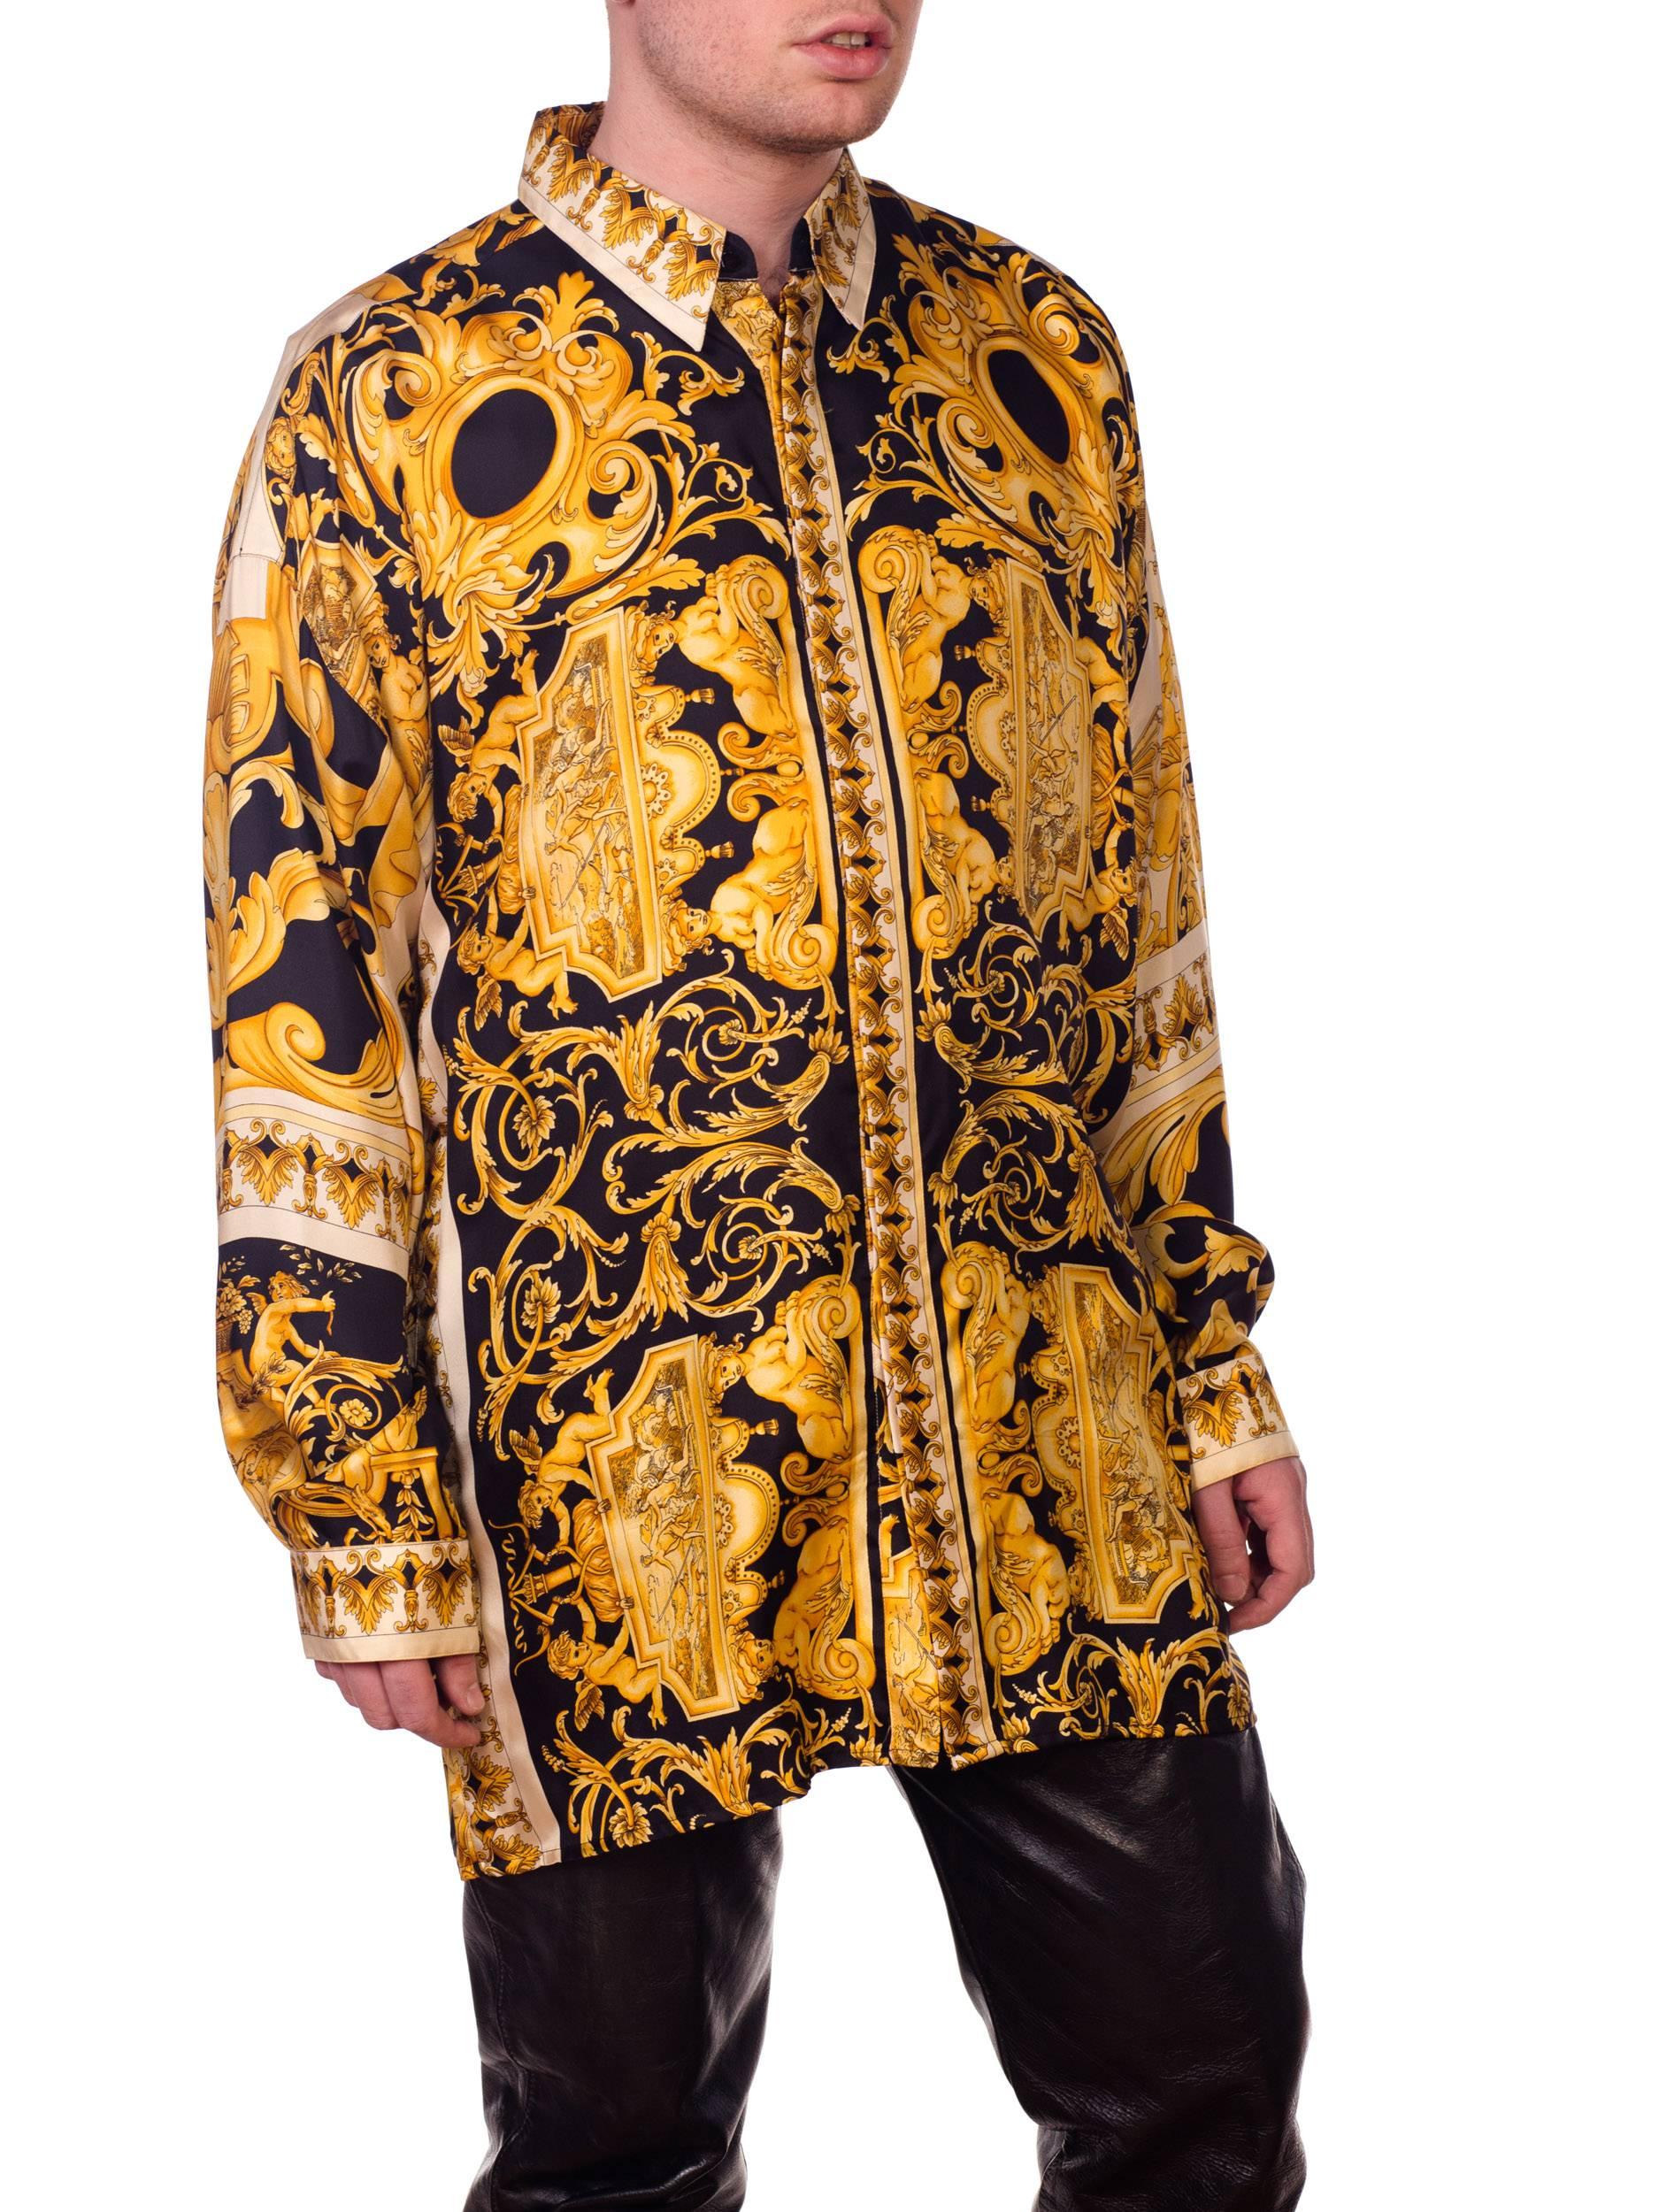 Atelier Gianni Versace Silk Gold Filigree Shirt, 1990s  4